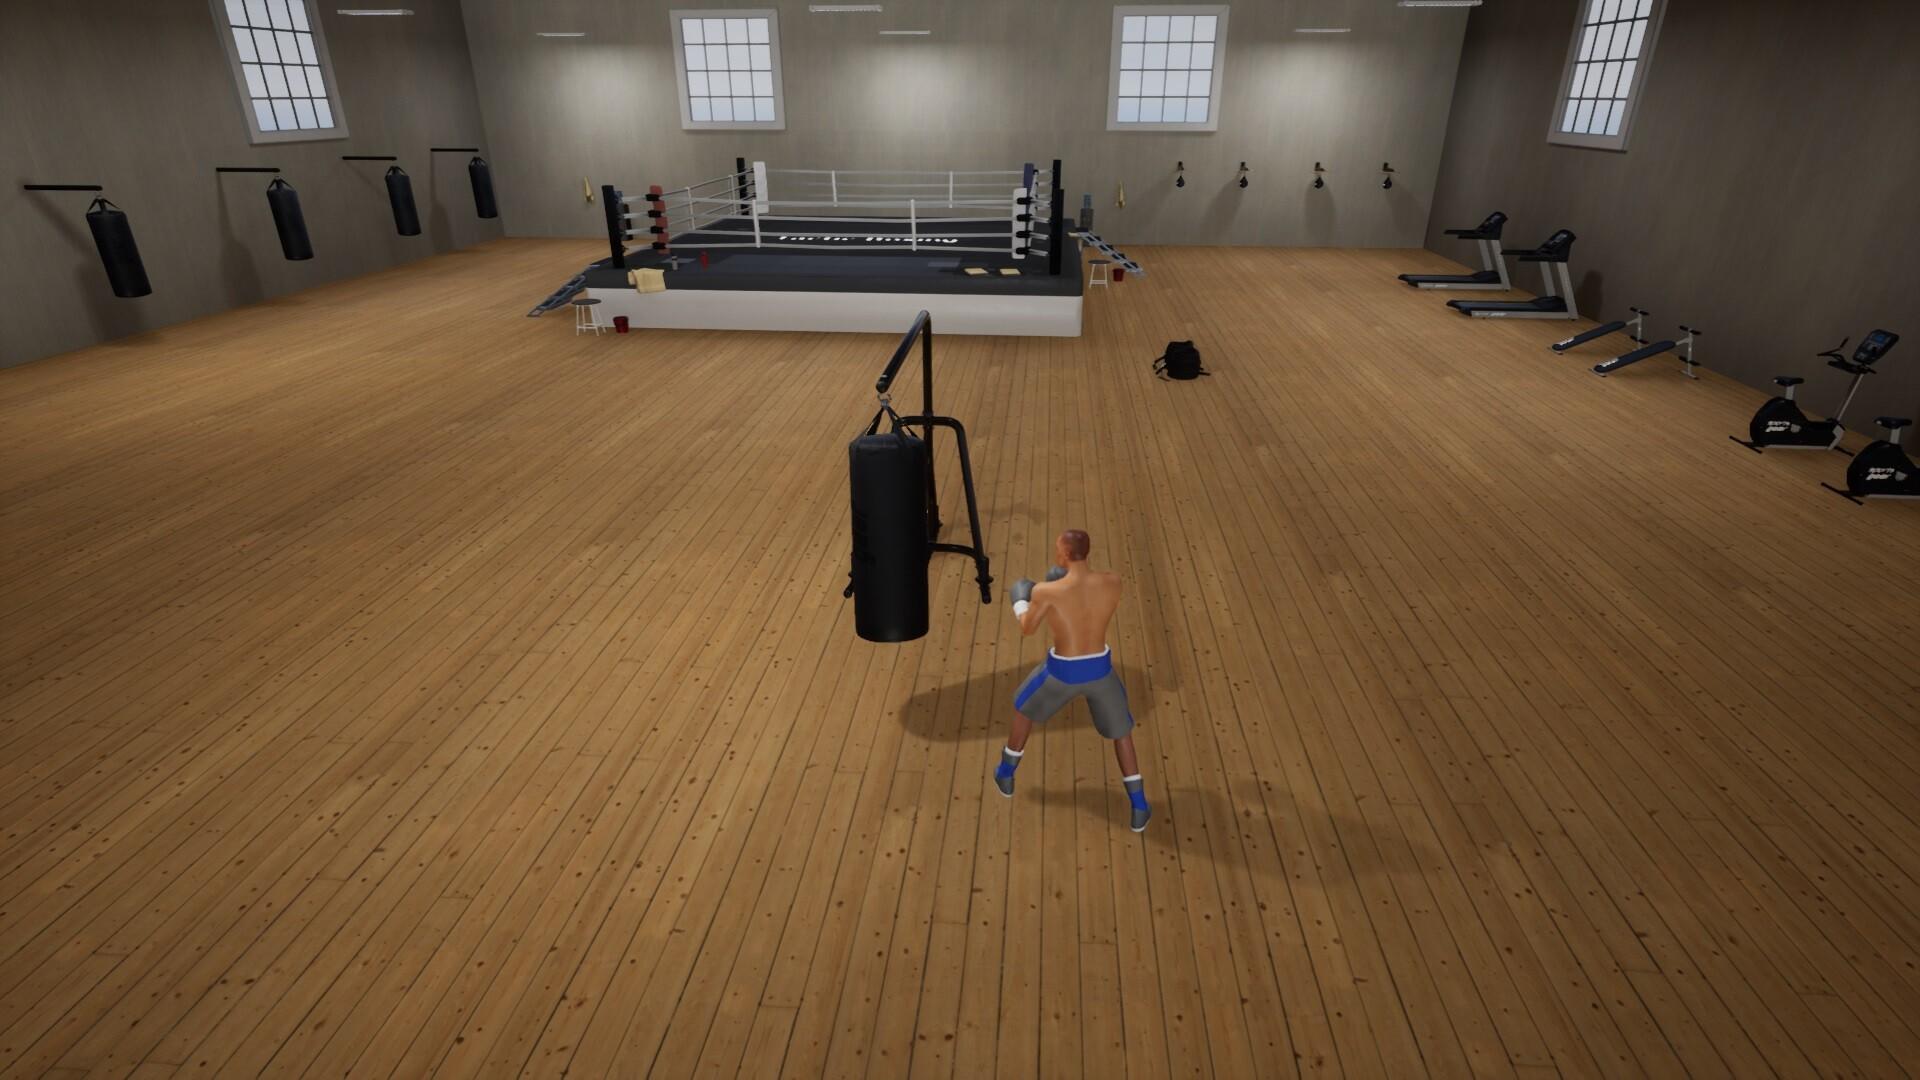 Tactic Boxing ภาพหน้าจอเกม